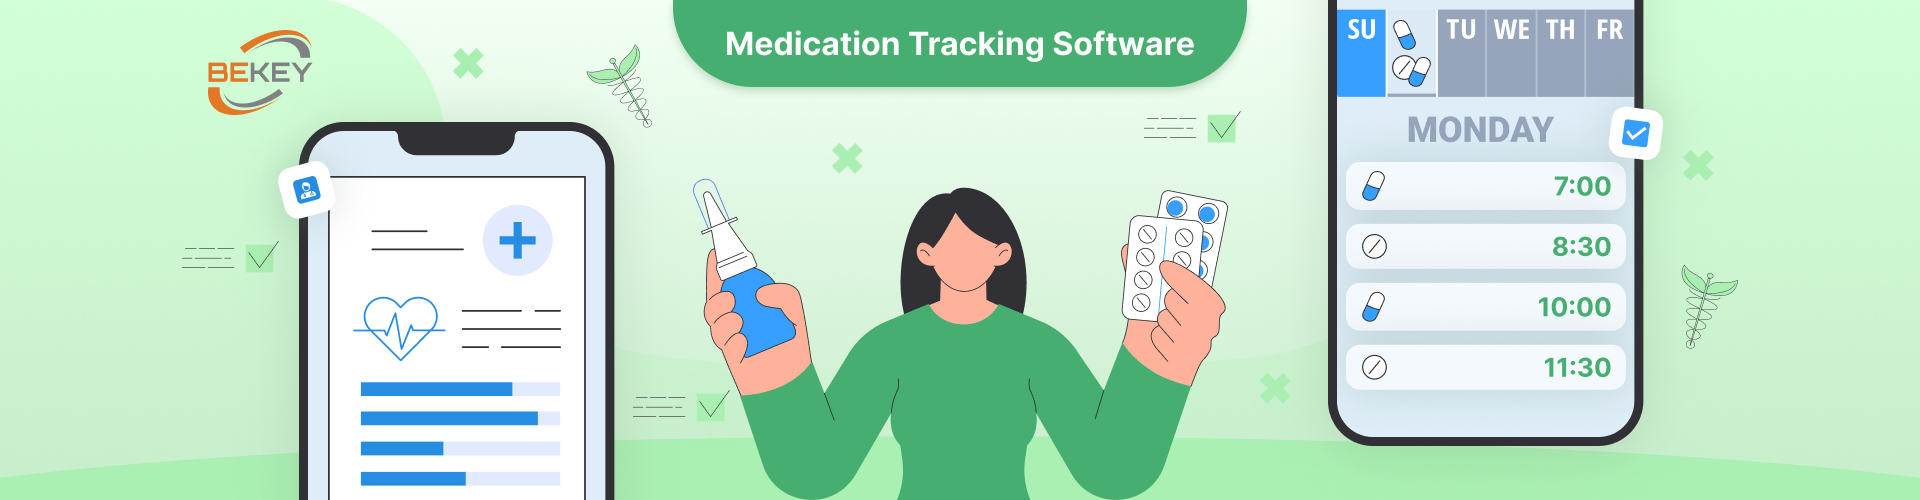 Medication Tracking Software - image